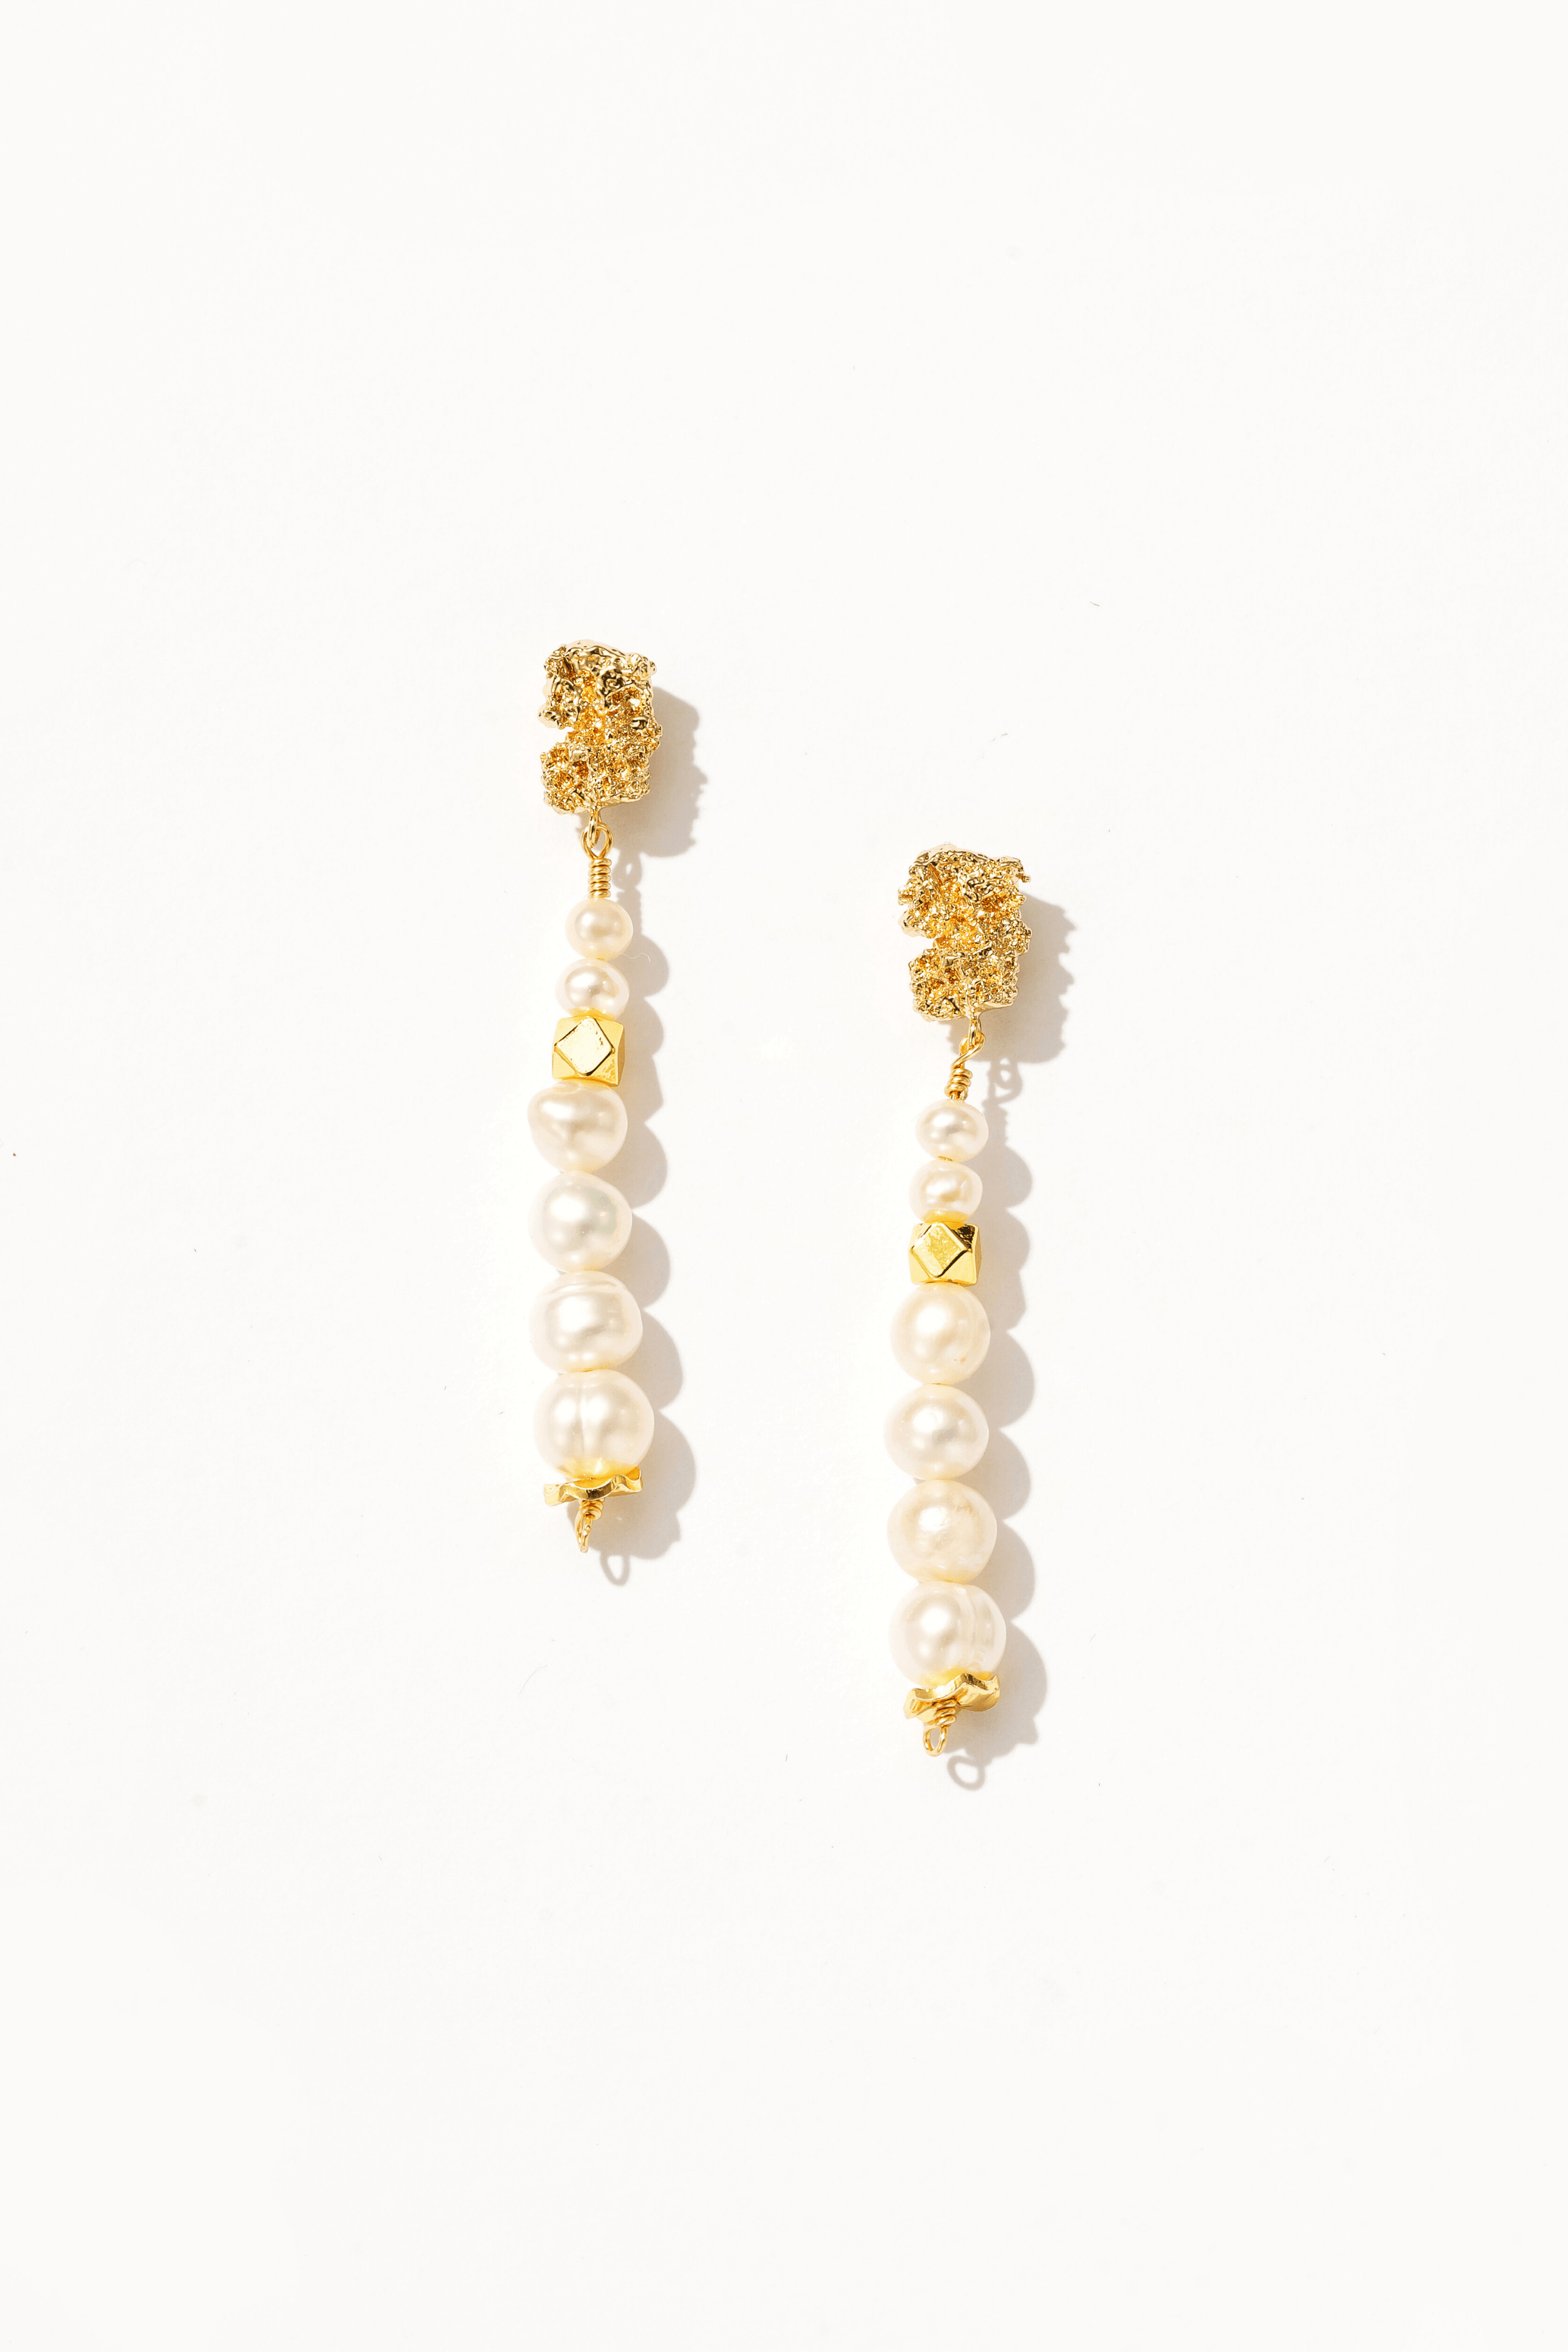 Anastasia Gold Dipped Pearl Earrings - Artsory